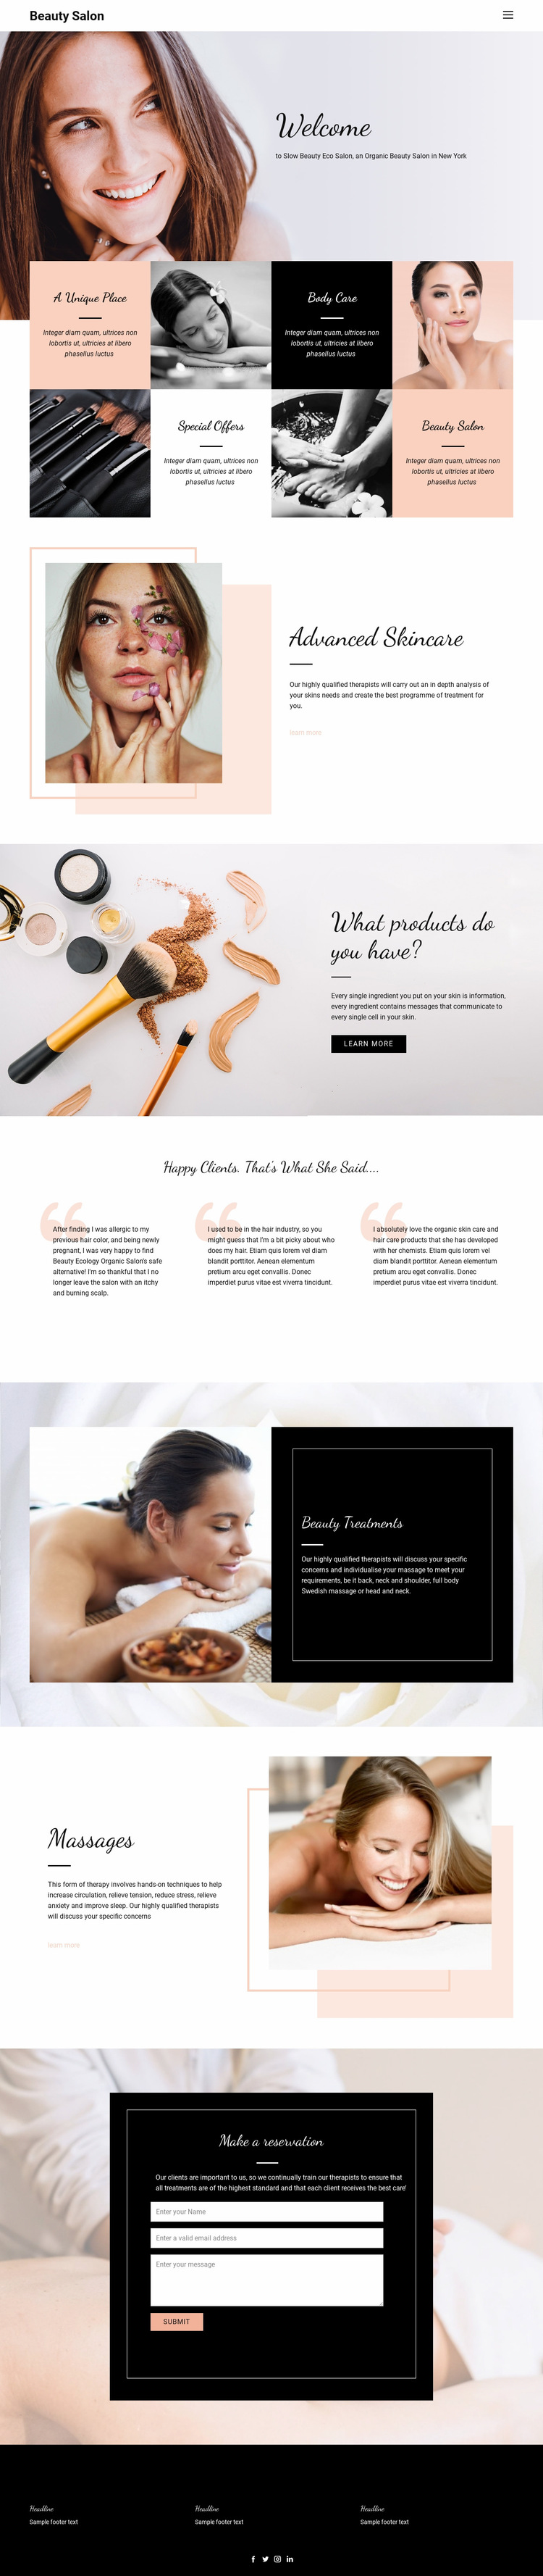 Hair, nail and beauty salon Web Page Design